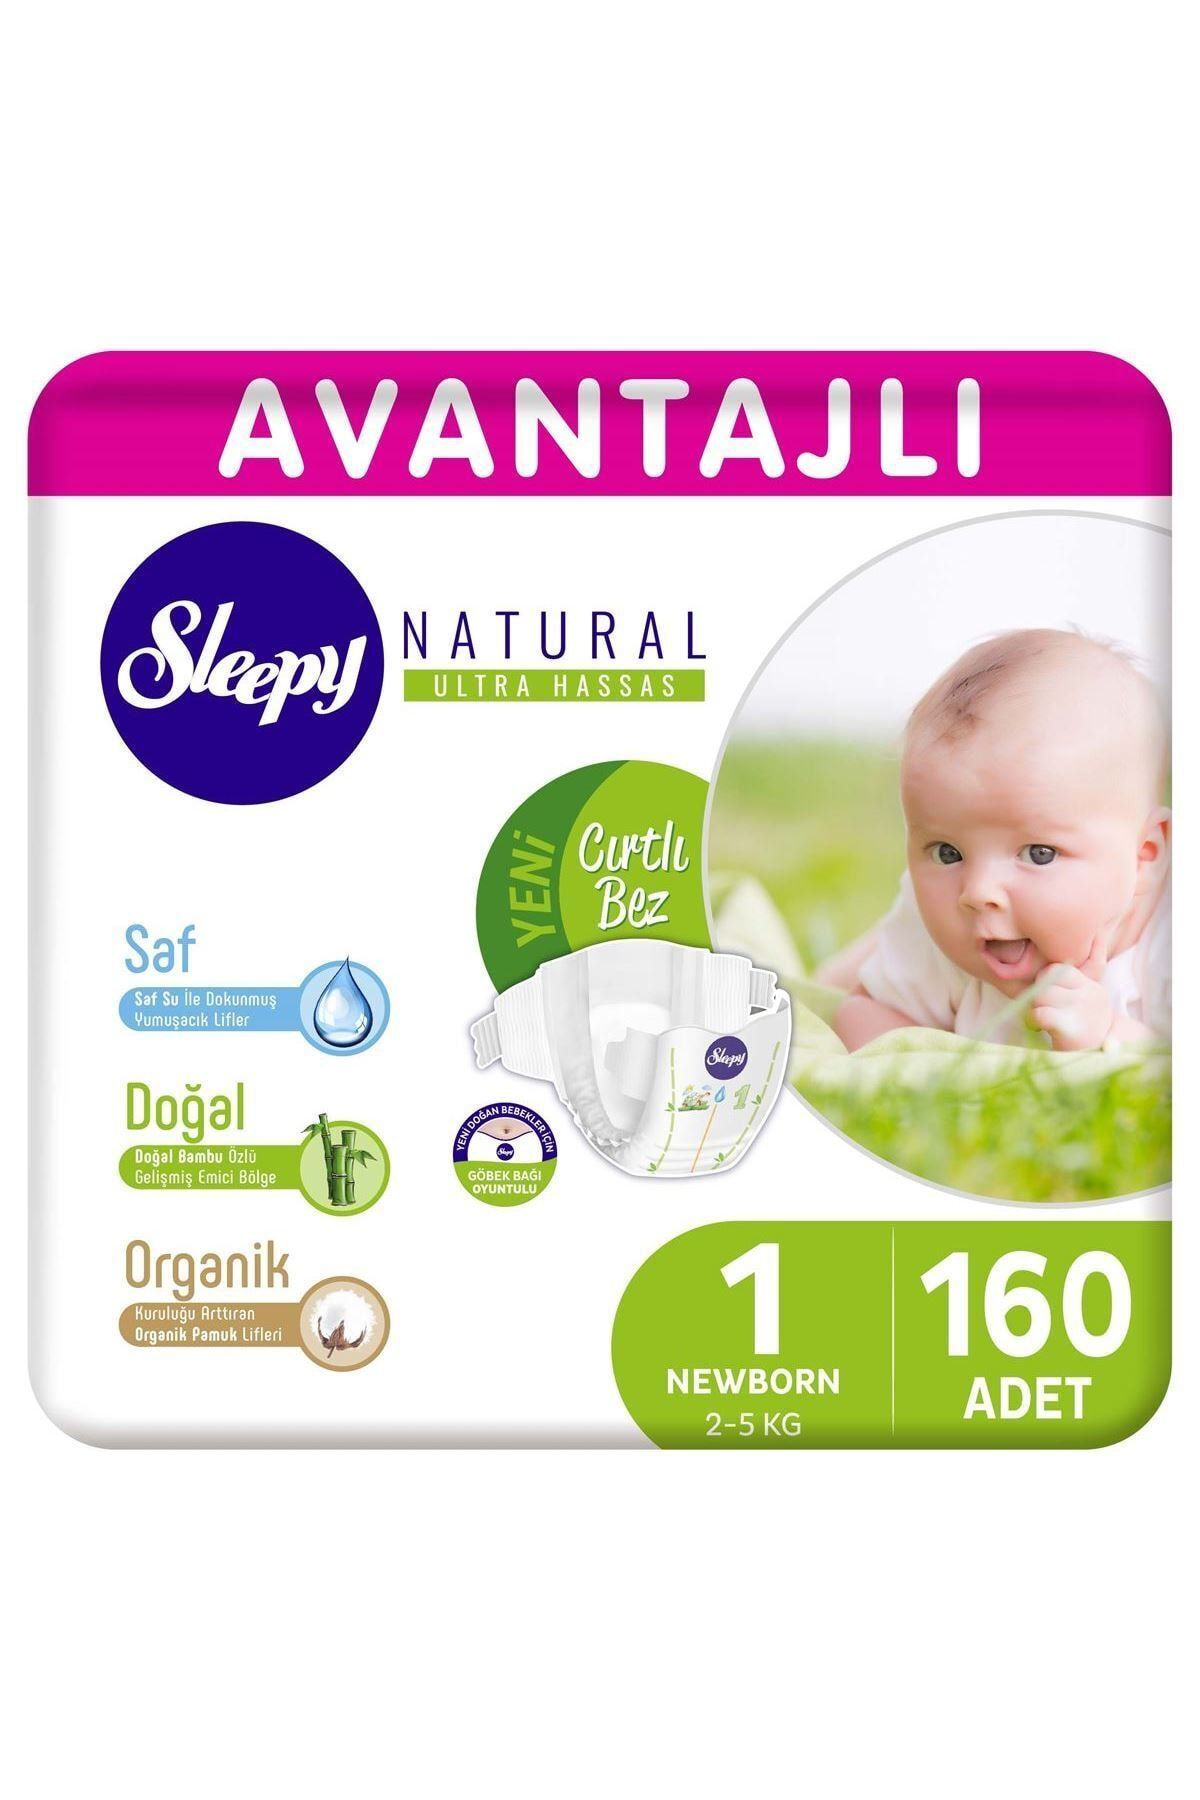 Sleepy Natural Avantajlı Bebek Bezi 1 Numara Yenidoğan 160 Adet